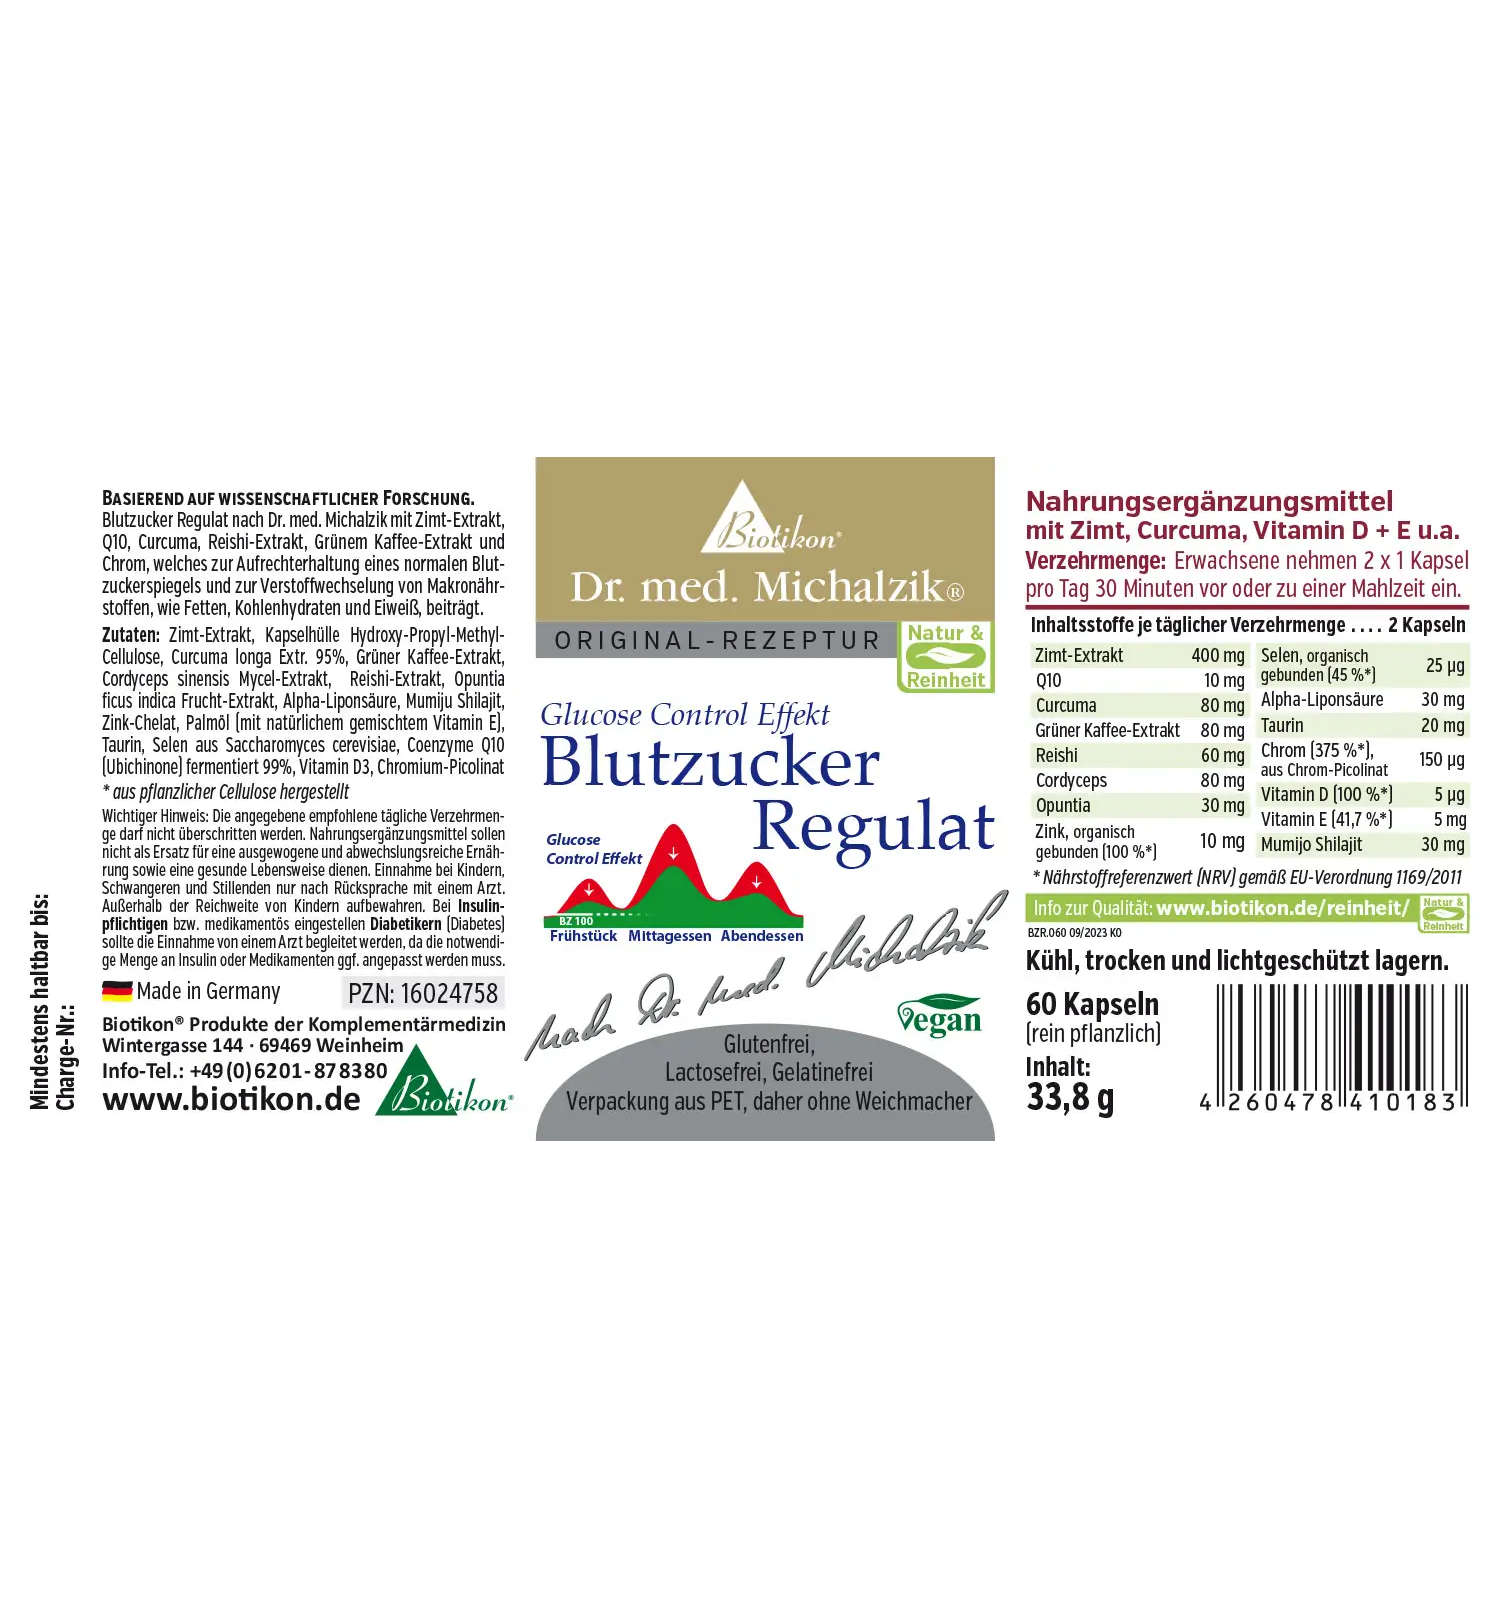 Blutzucker Regulat von Biotikon - 60 Kapseln - Etikett